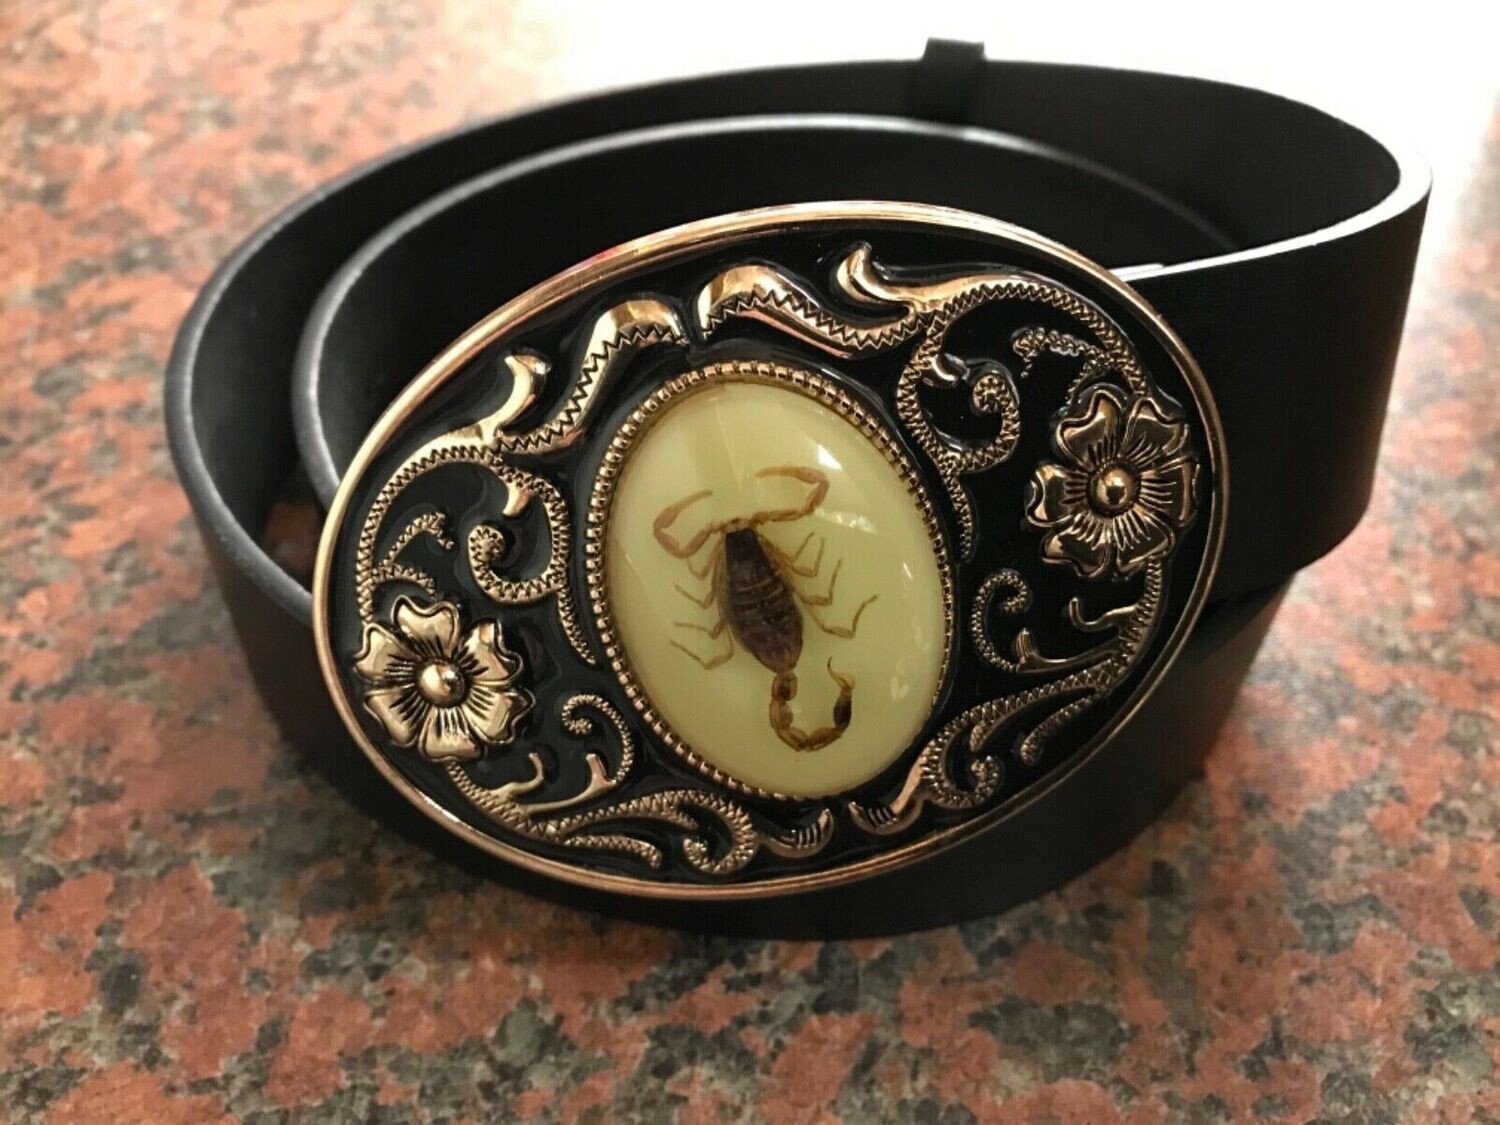 Ornate Encased Scorpion buckle with belt